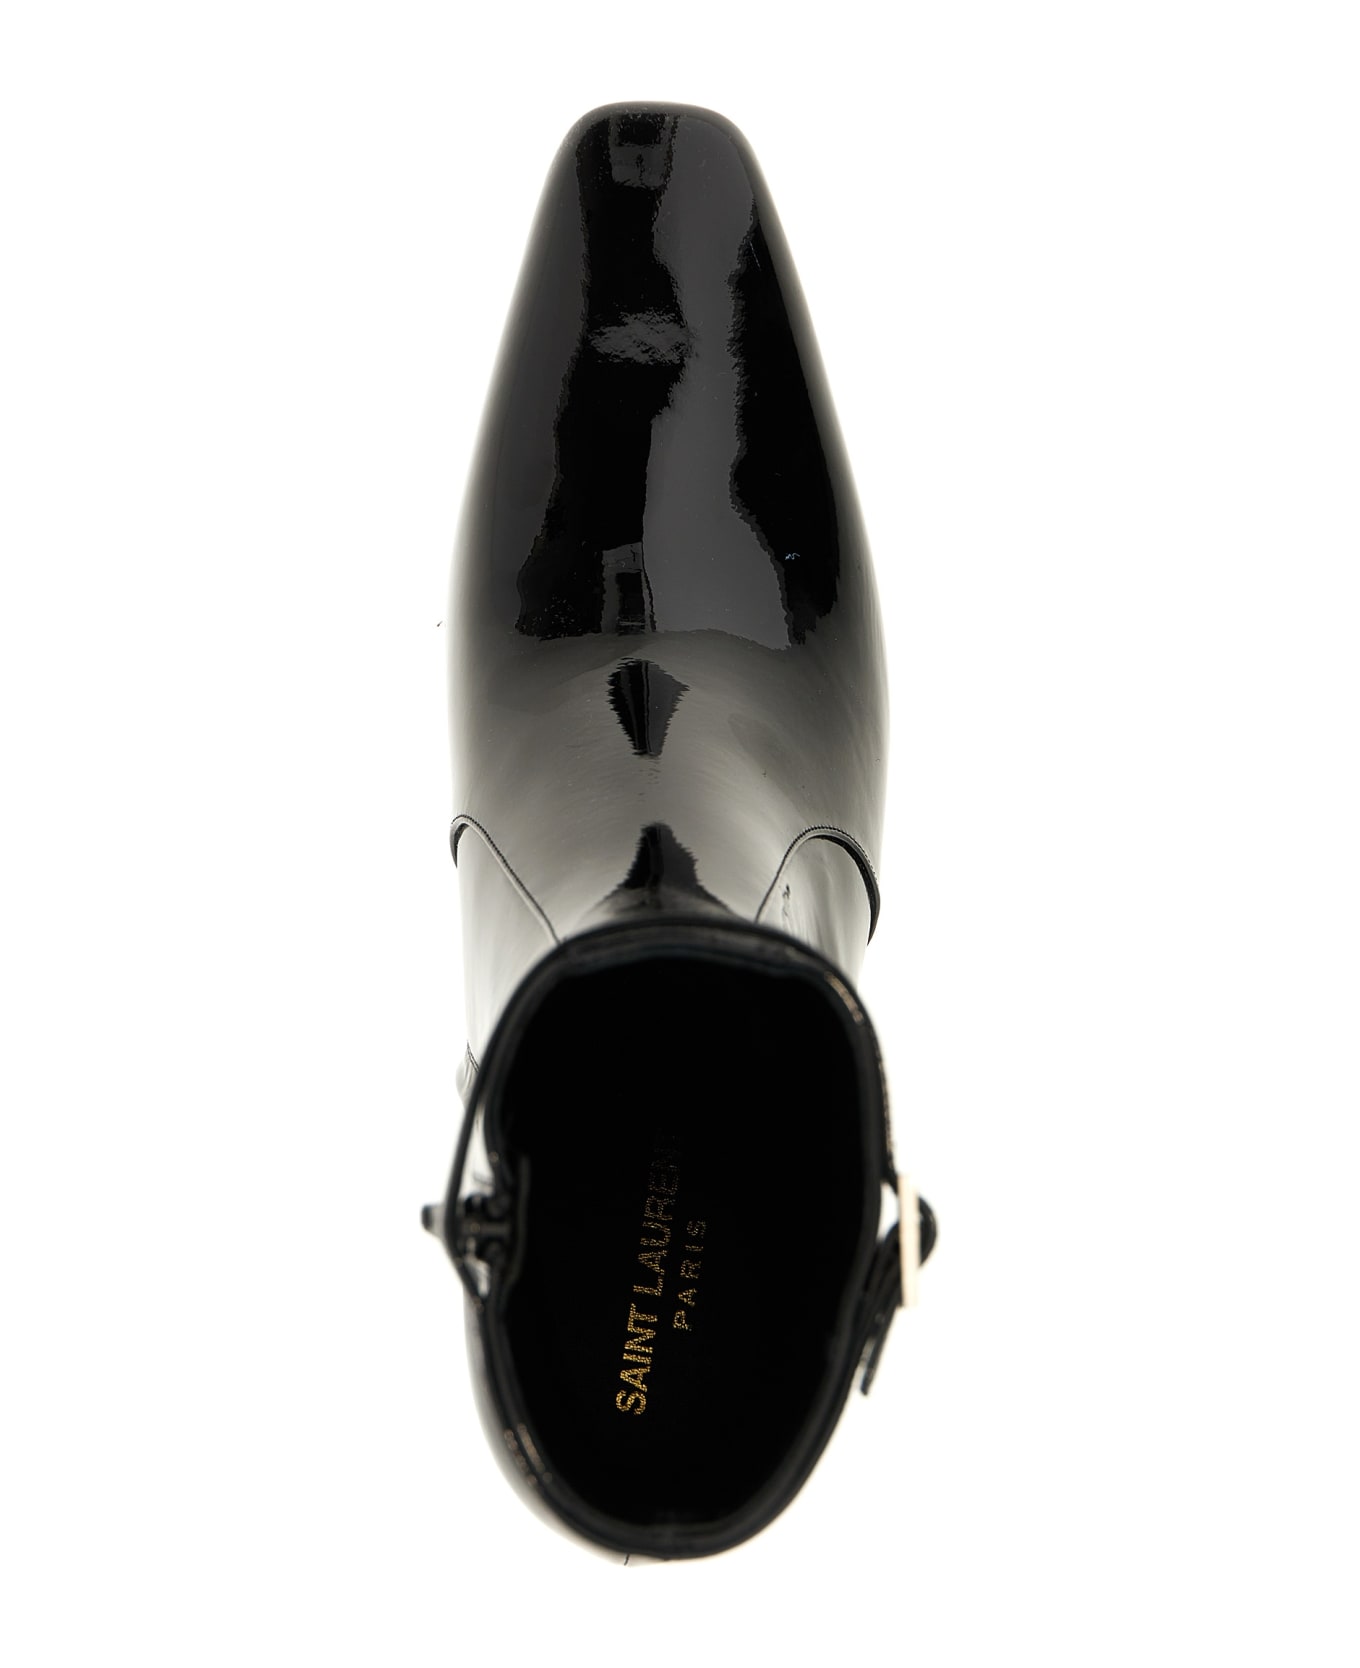 Saint Laurent 'betty' Ankle Boots - Black   ブーツ